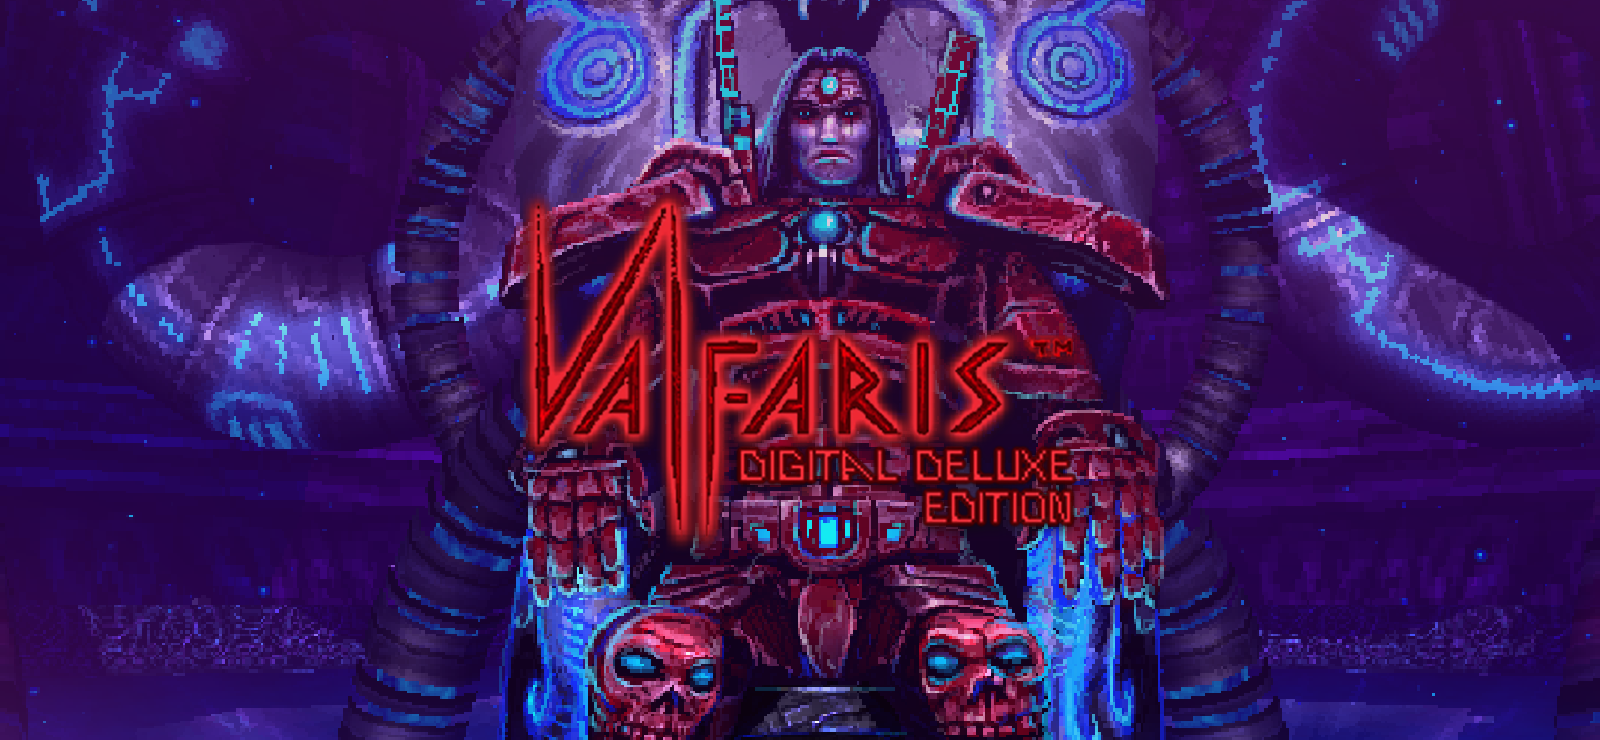 Valfaris Digital Deluxe Edition